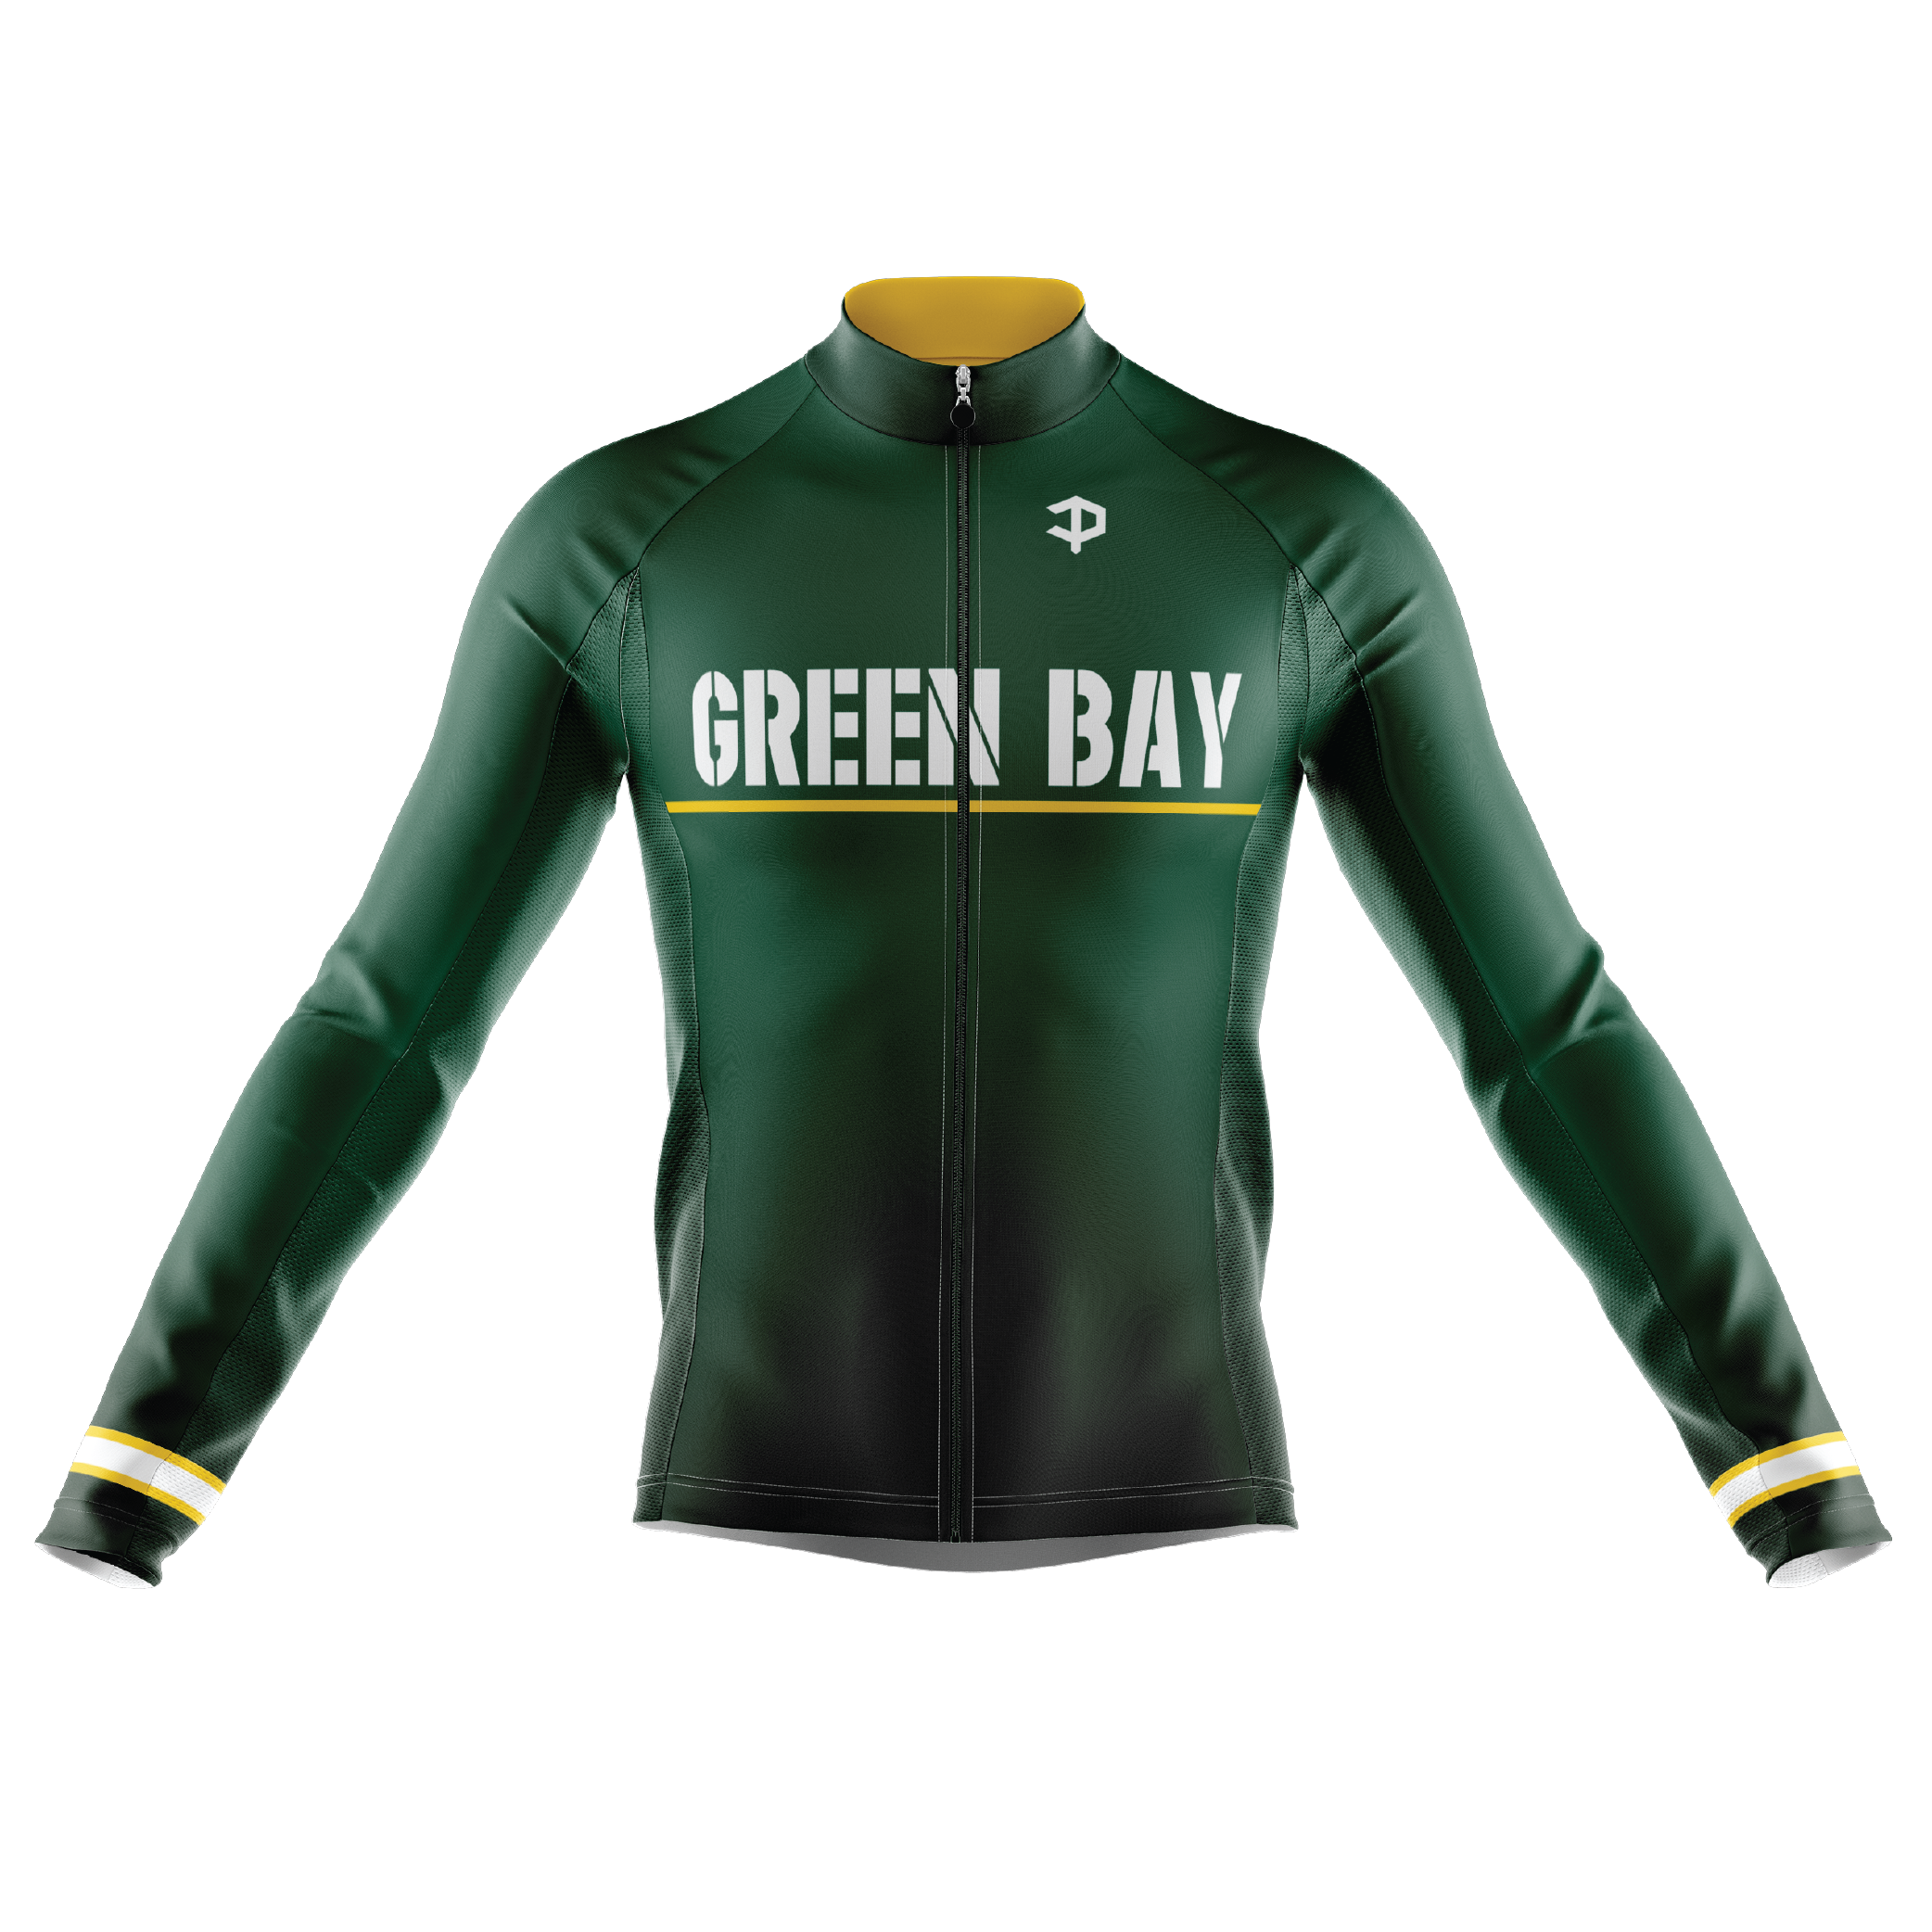 Green Bay Long Sleeve Cycling Jersey